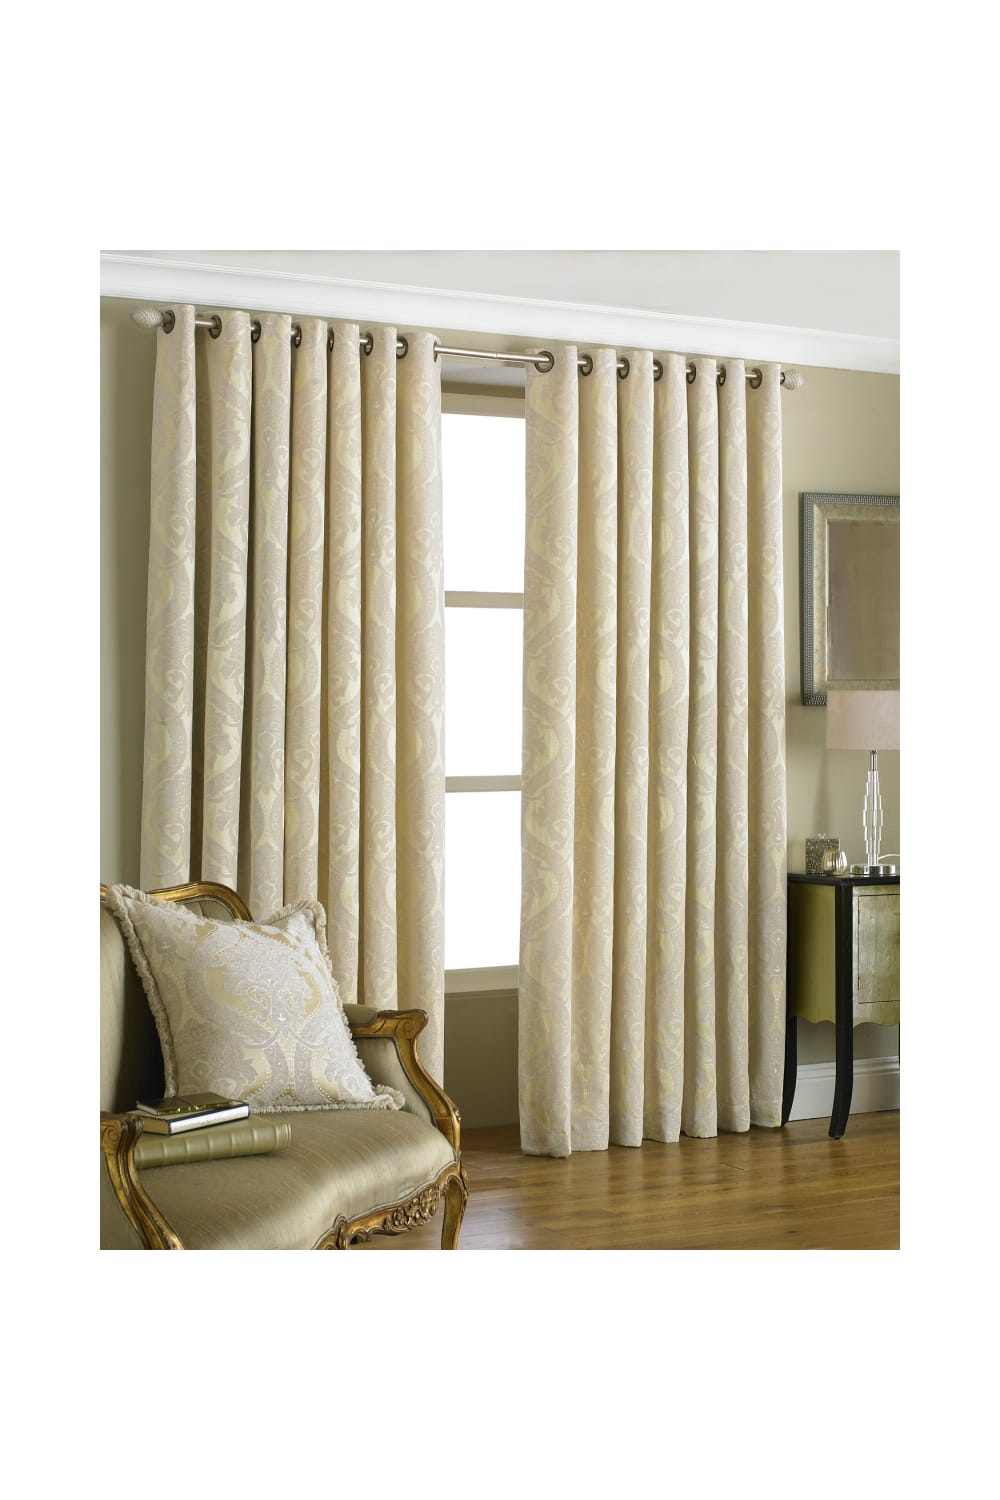 Riva Home Renaissance Ringtop Curtains (Cream) (66 x 72 inch)